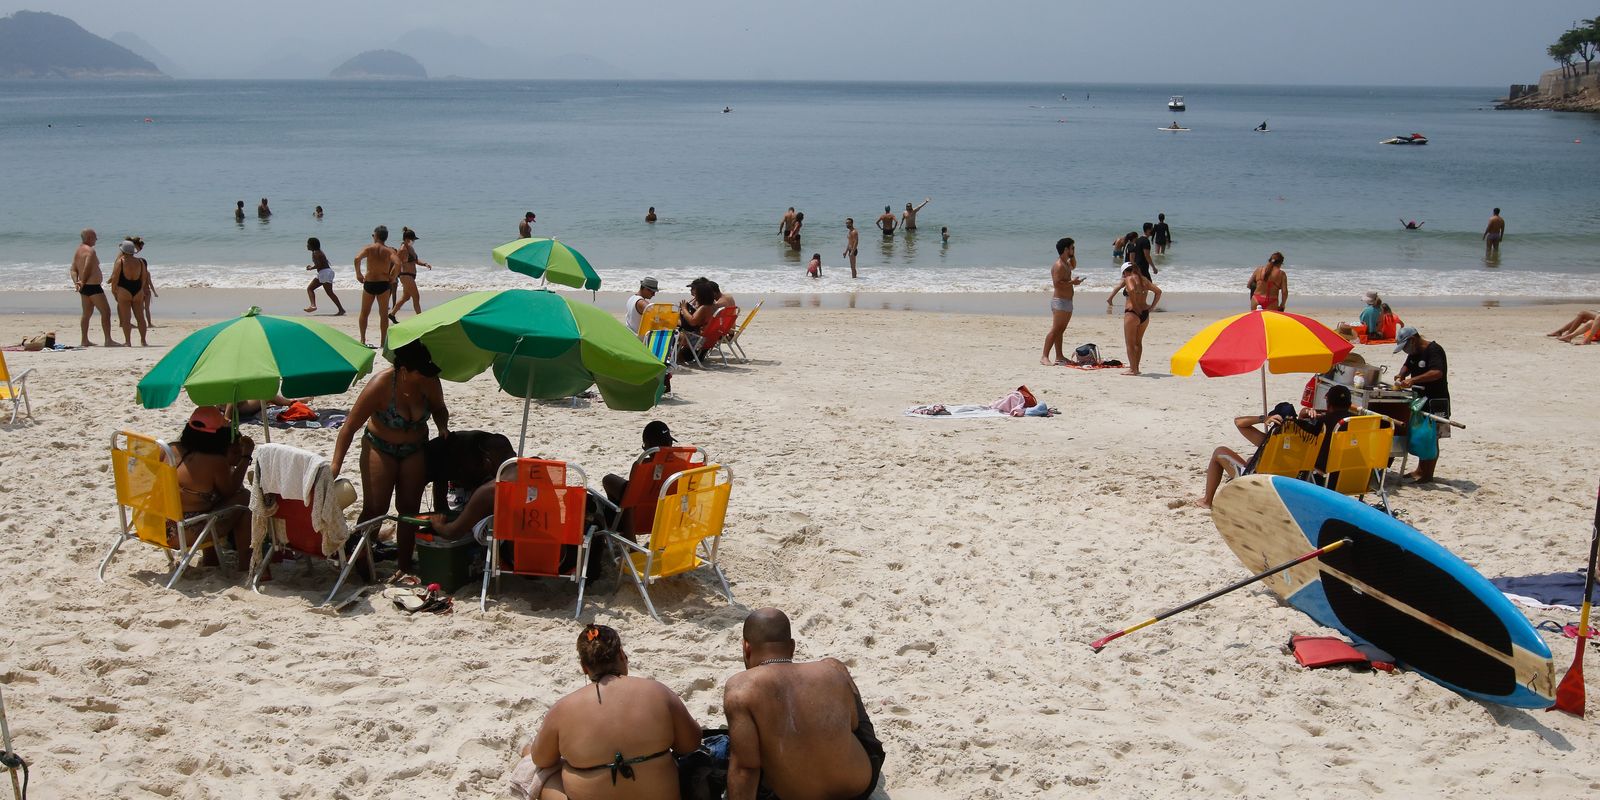 Movimente-se: Conheça a Luta de Praia - Orla Rio